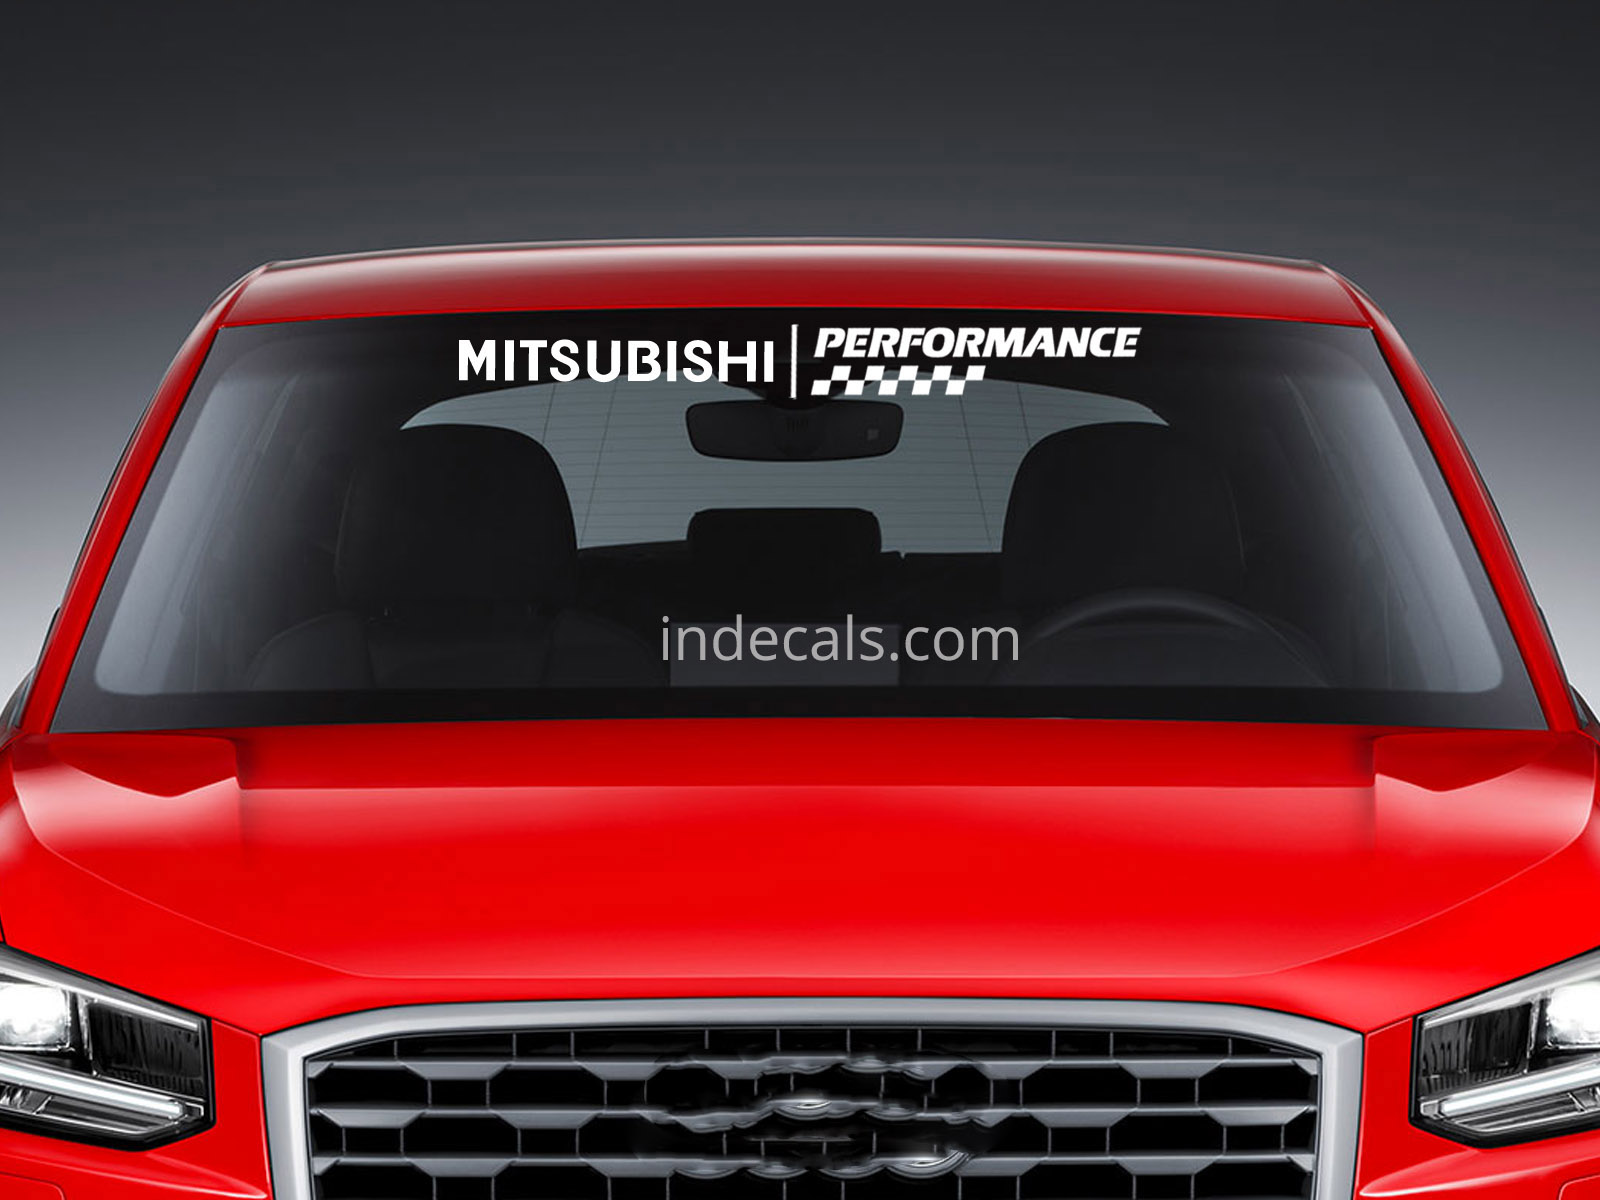 1 x Mitsubishi Performance Sticker for Windshield or Back Window - White